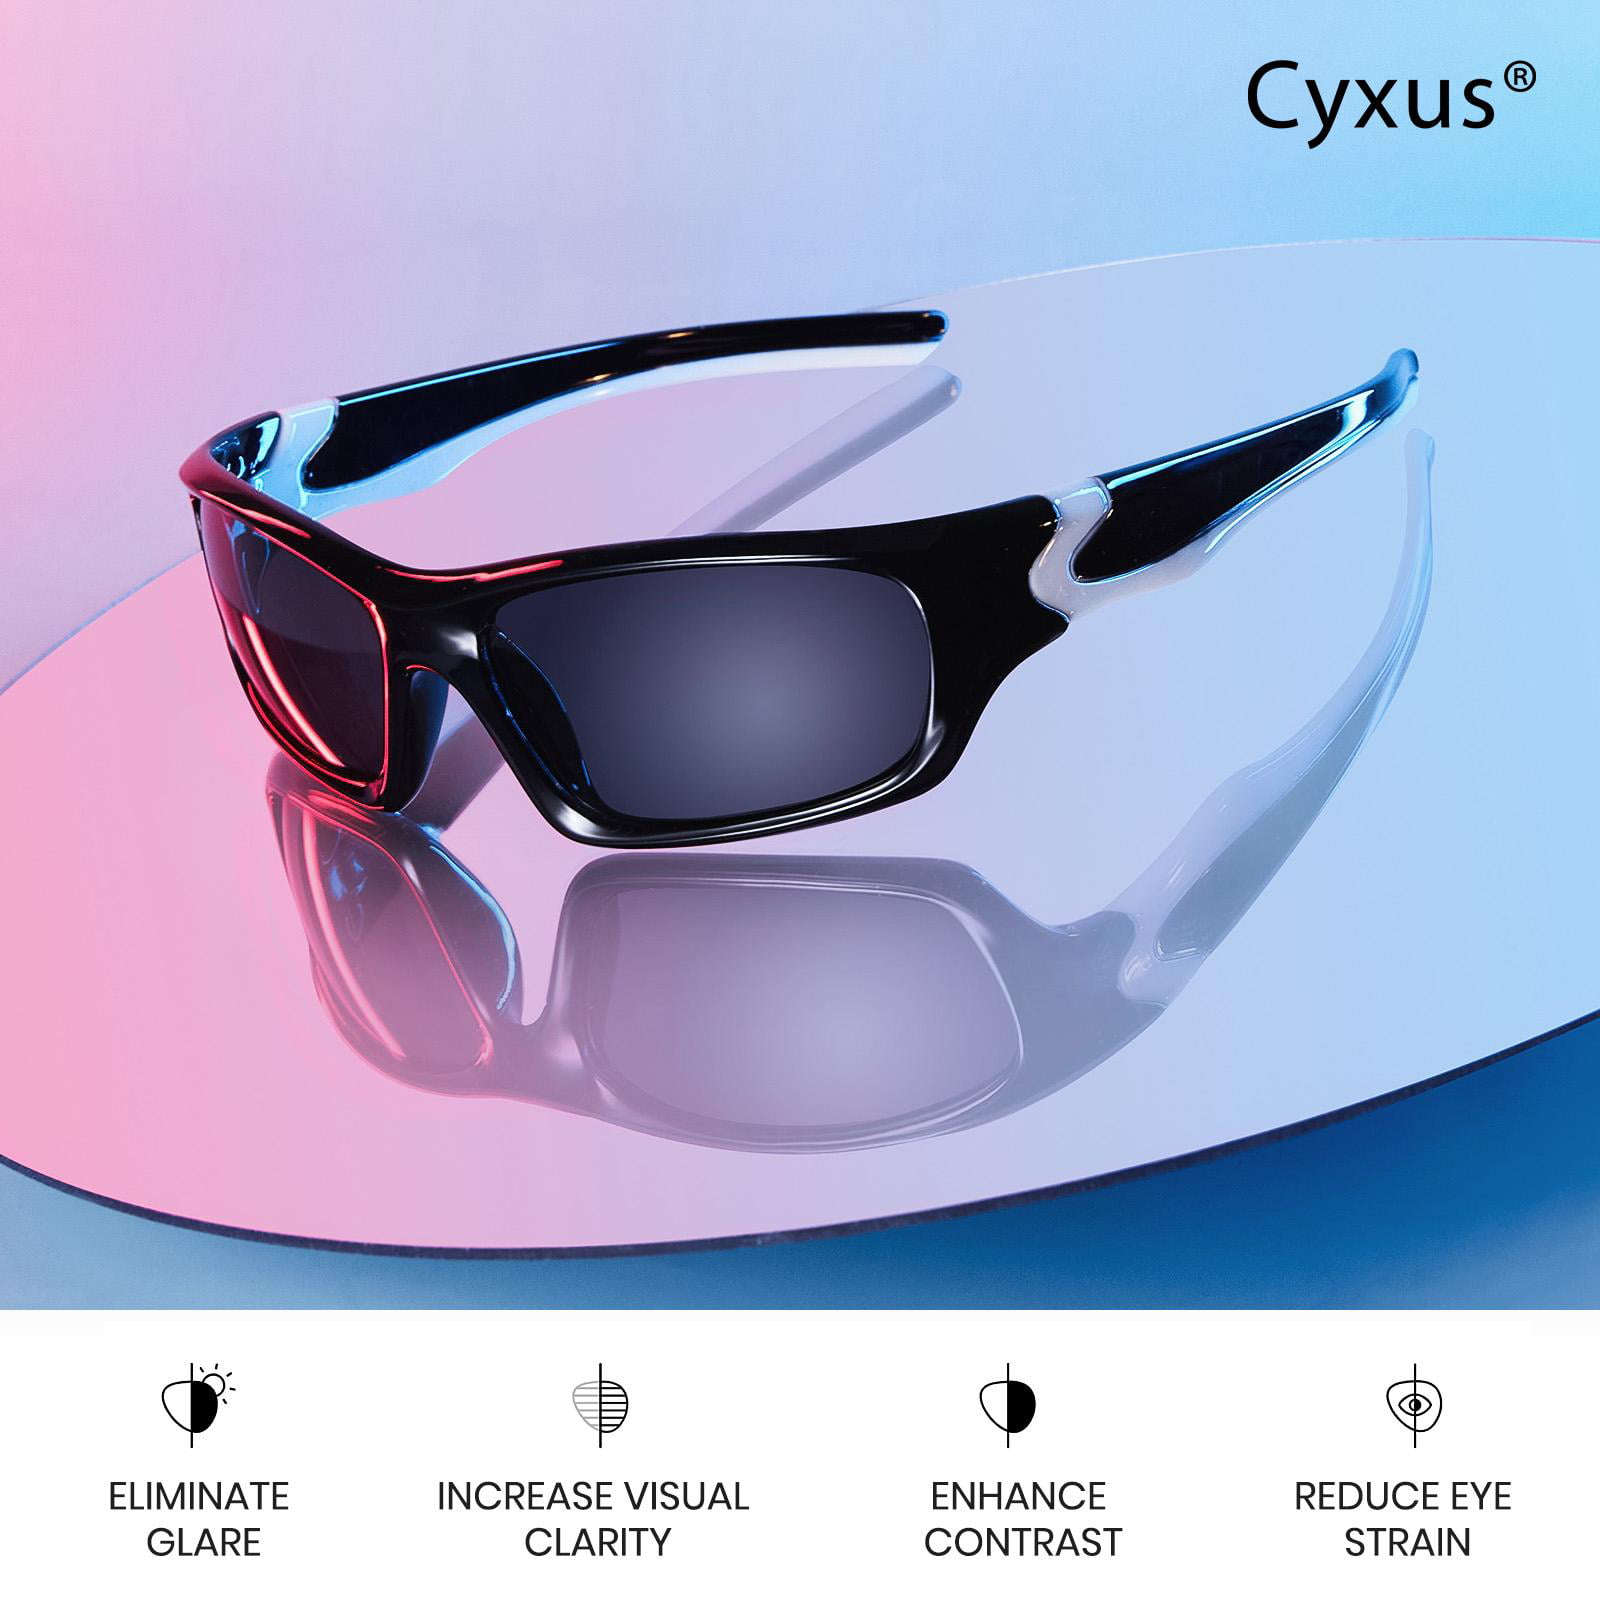 Sun Glasses Sunglasses UV400 Goggle Cycling Fishing  Lens Cool Eyewear Outdoor 